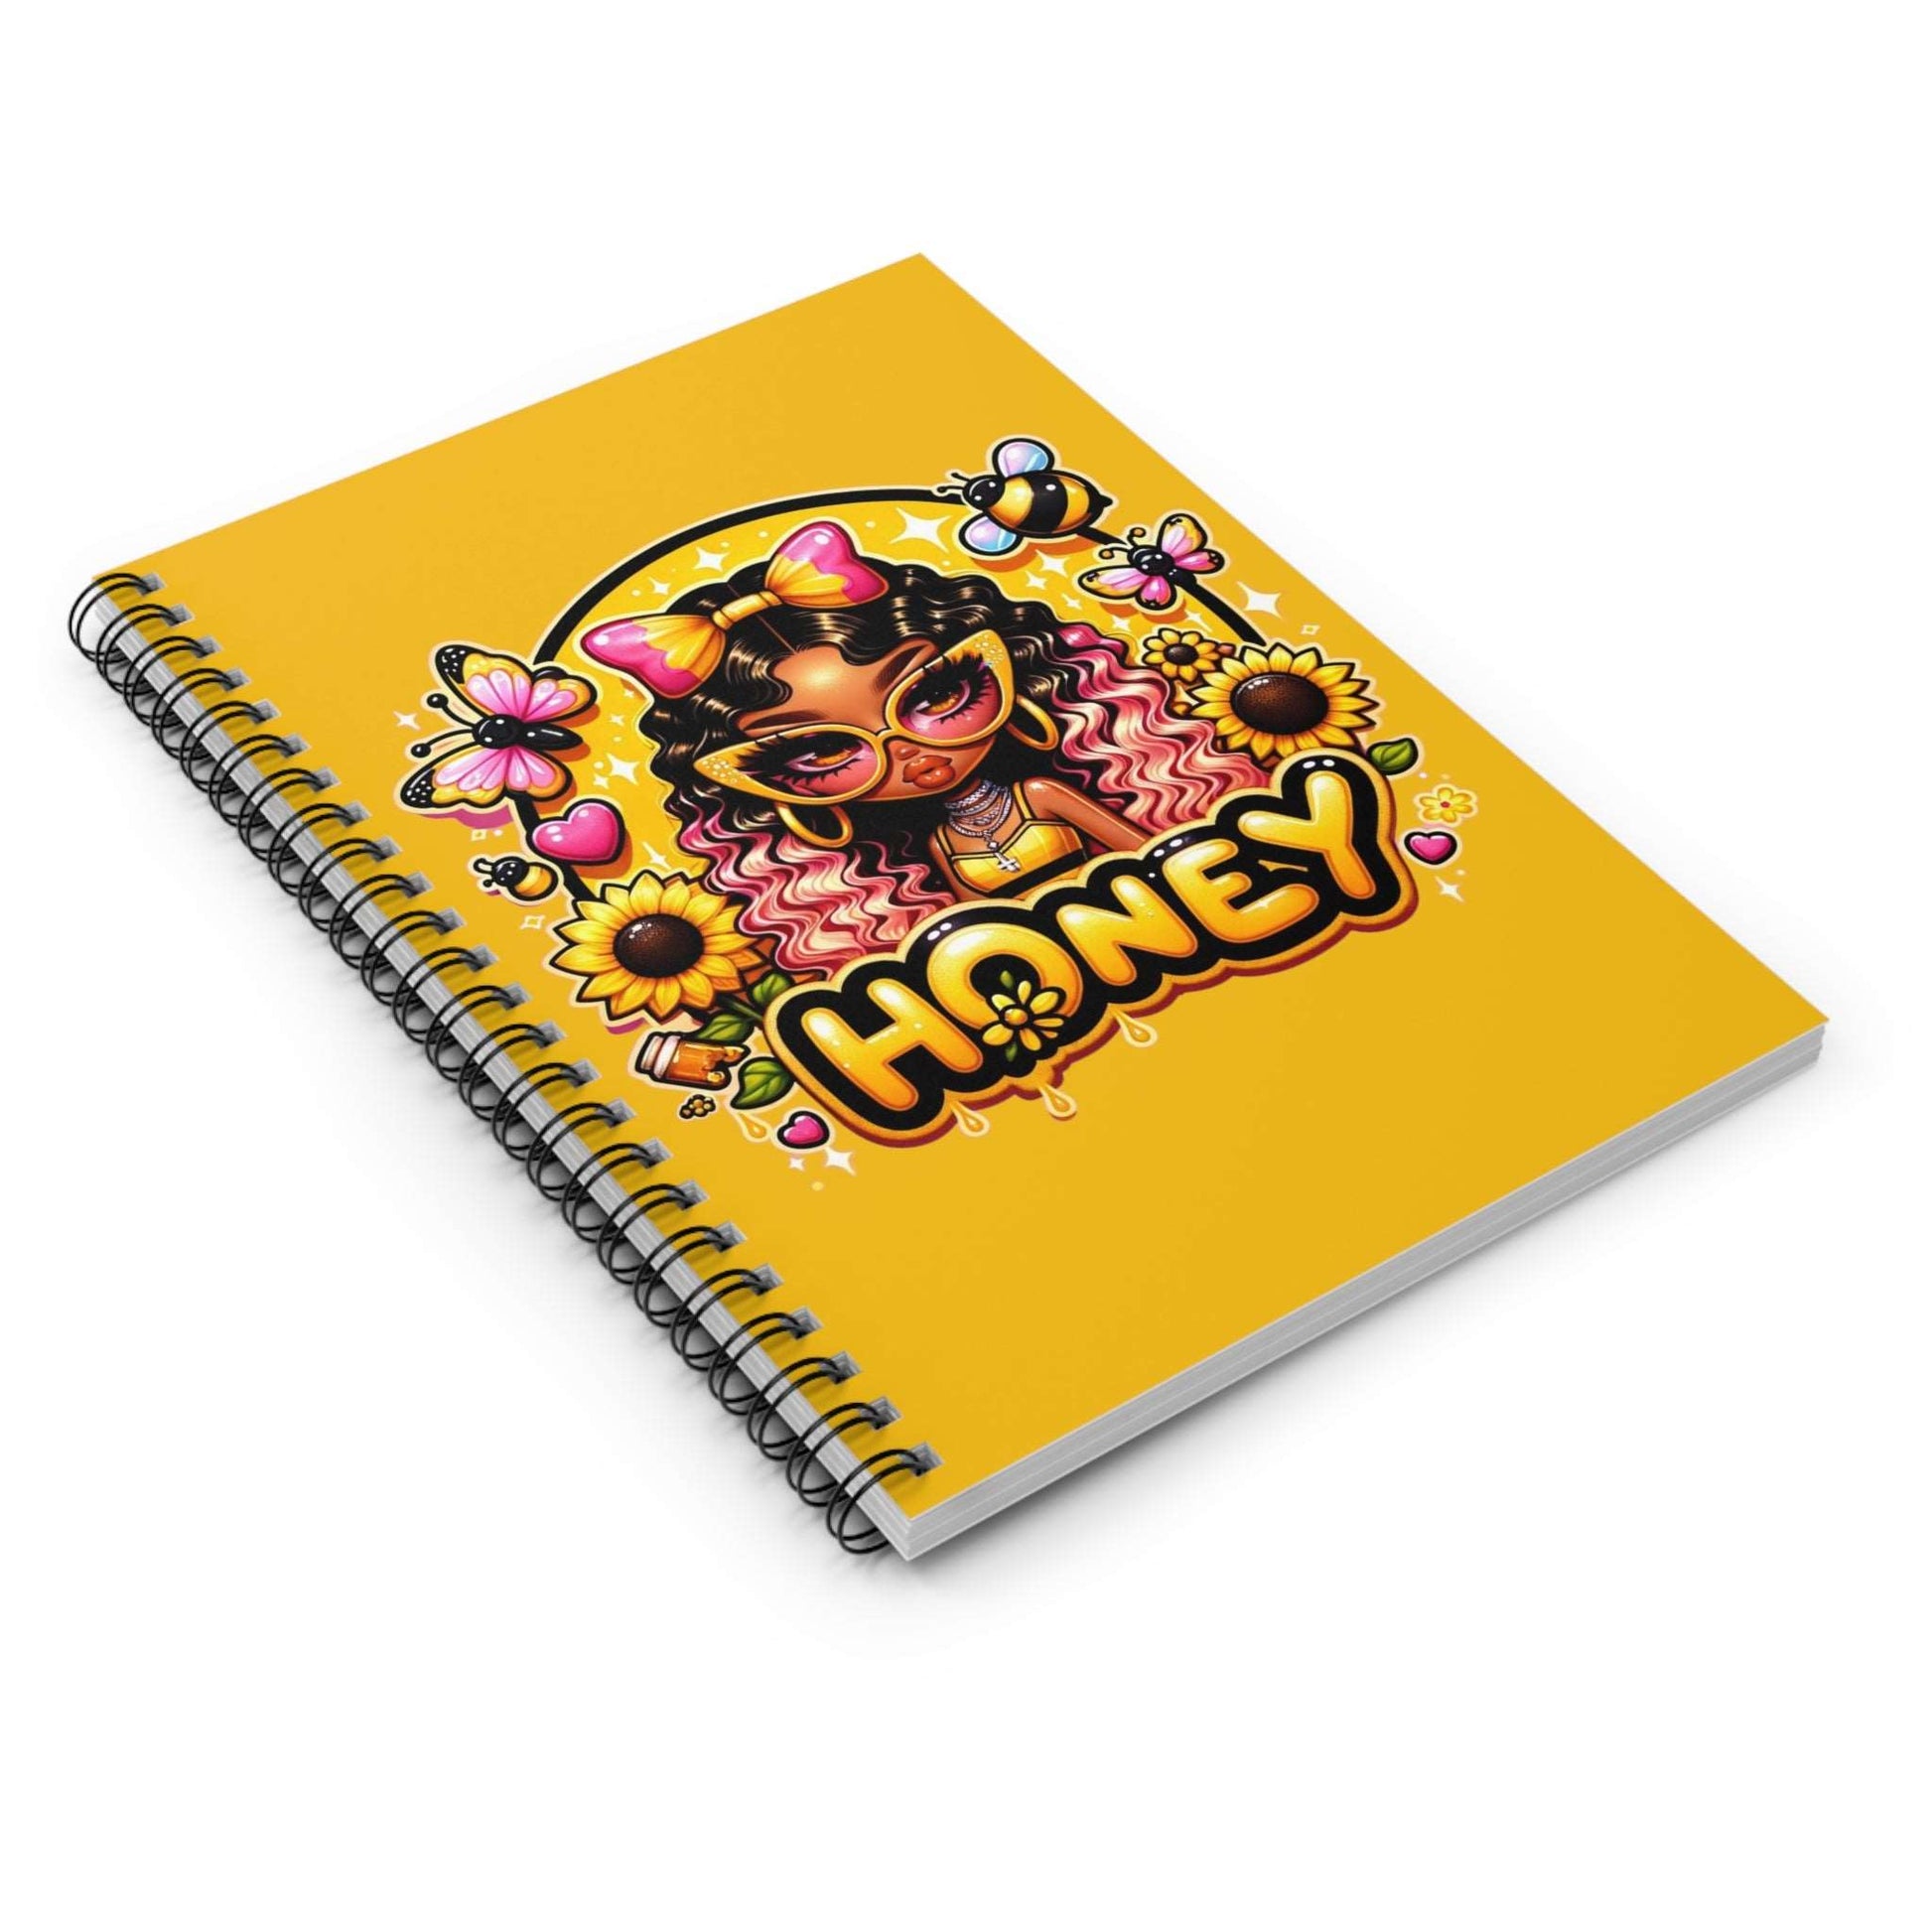 Honey Spiral Notebook - Ruled Line, Cute African American Notebook